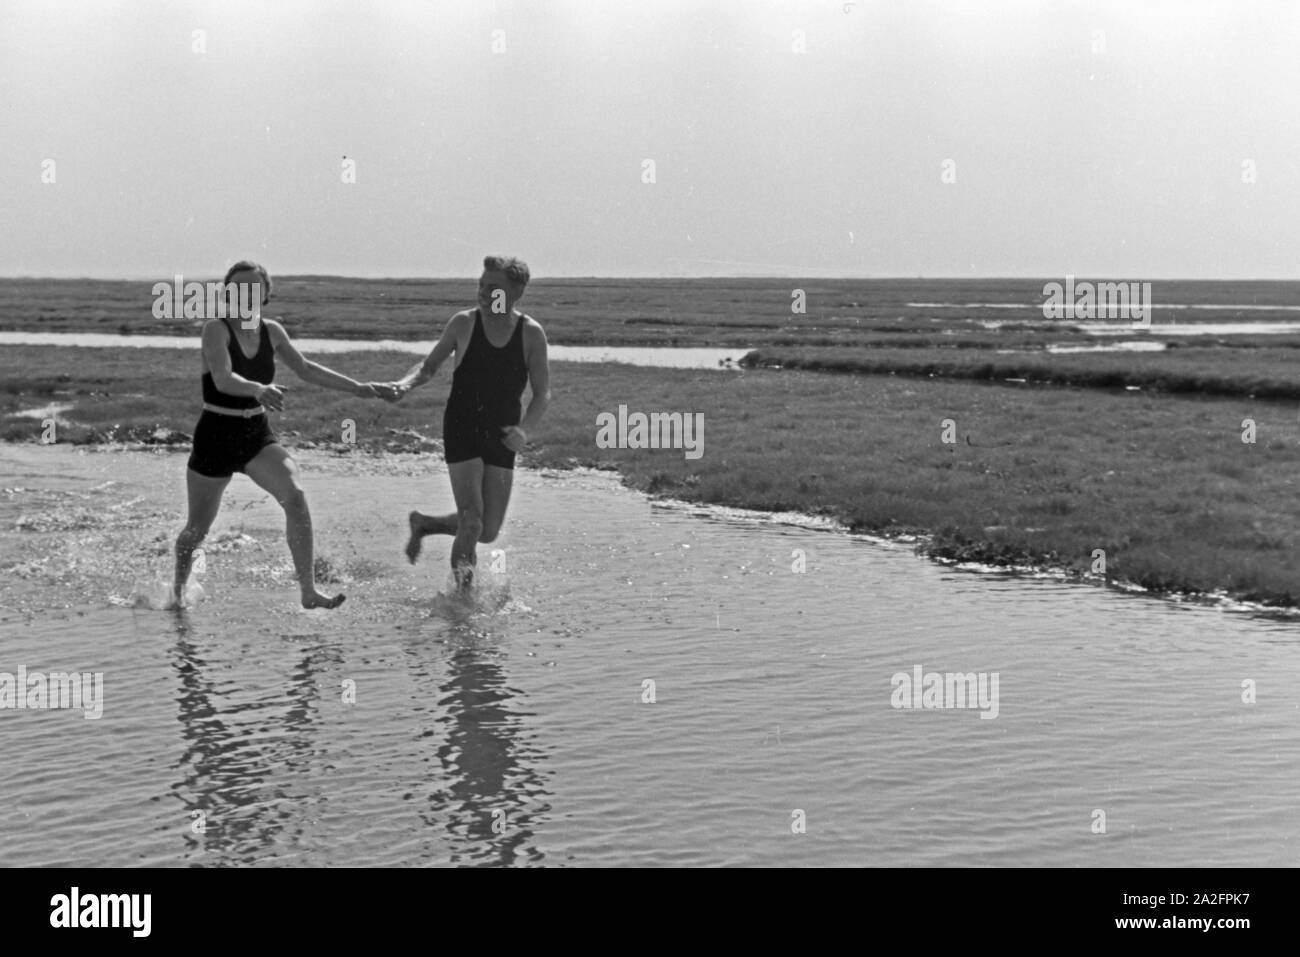 Urlauber am Strand der Nordseeinsel Juist, Deutschland 1930er Jahre. Holidaymakers on the beach of East Frisian island of Juist, Germany 1930s. Stock Photo